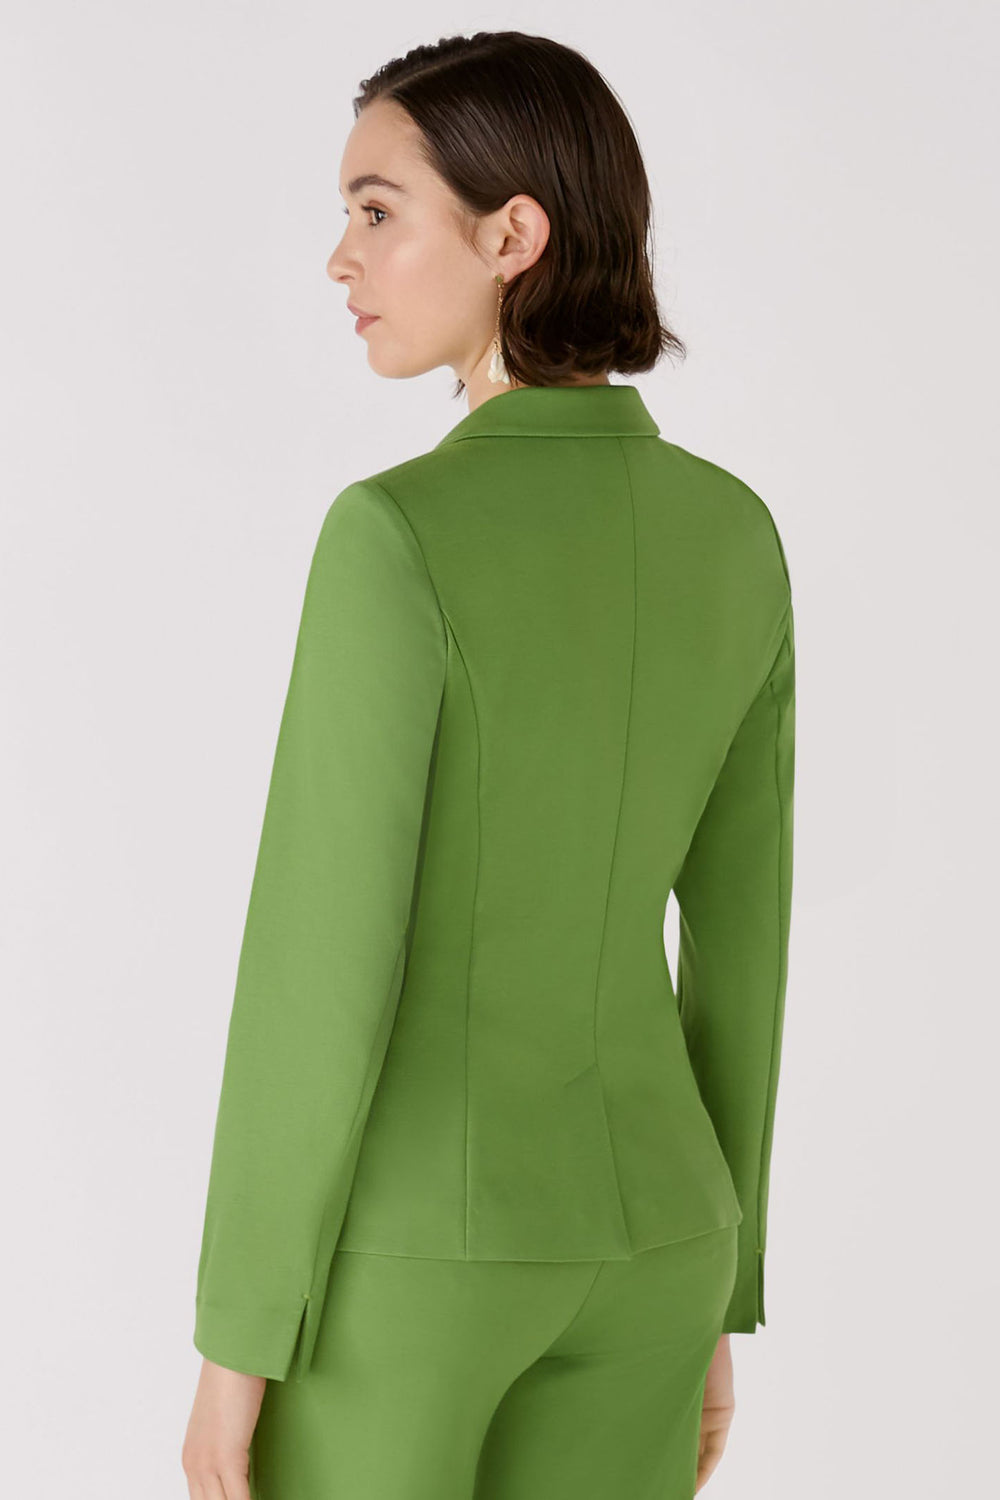 Oui 88450 Green Cloyee Two Button Blazer Jacket - Olivia Grace Fashion